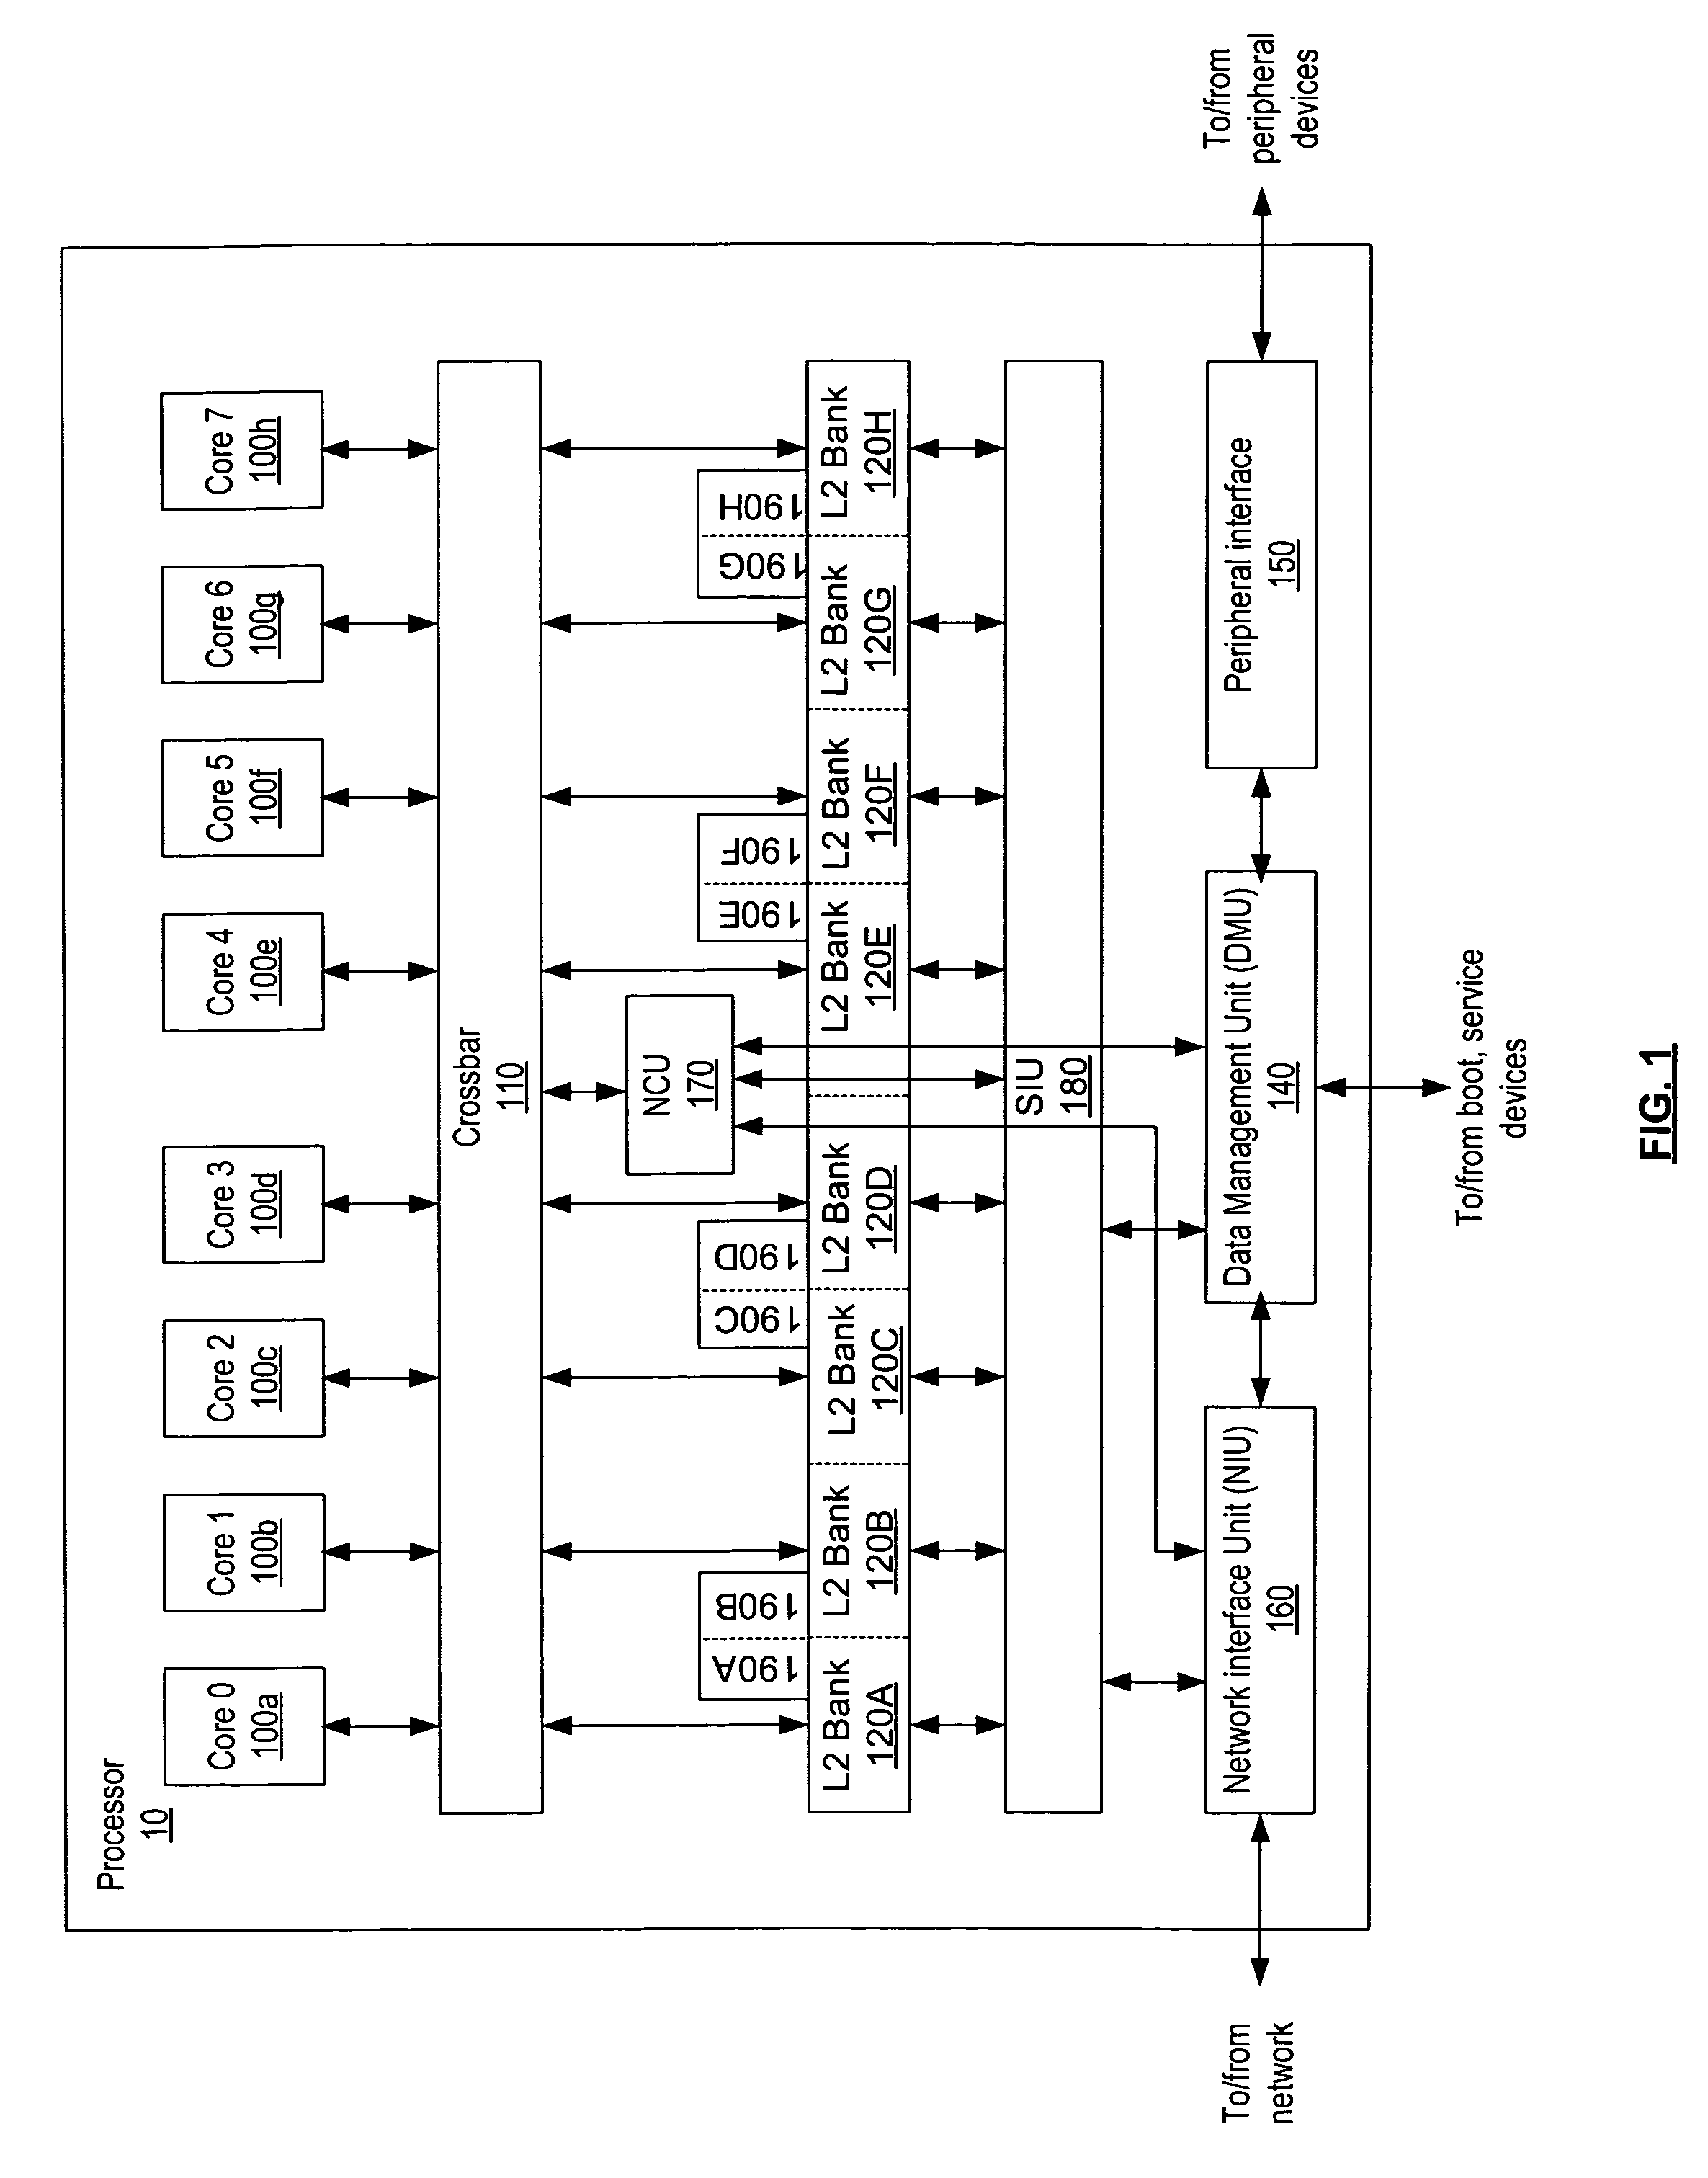 System interface unit